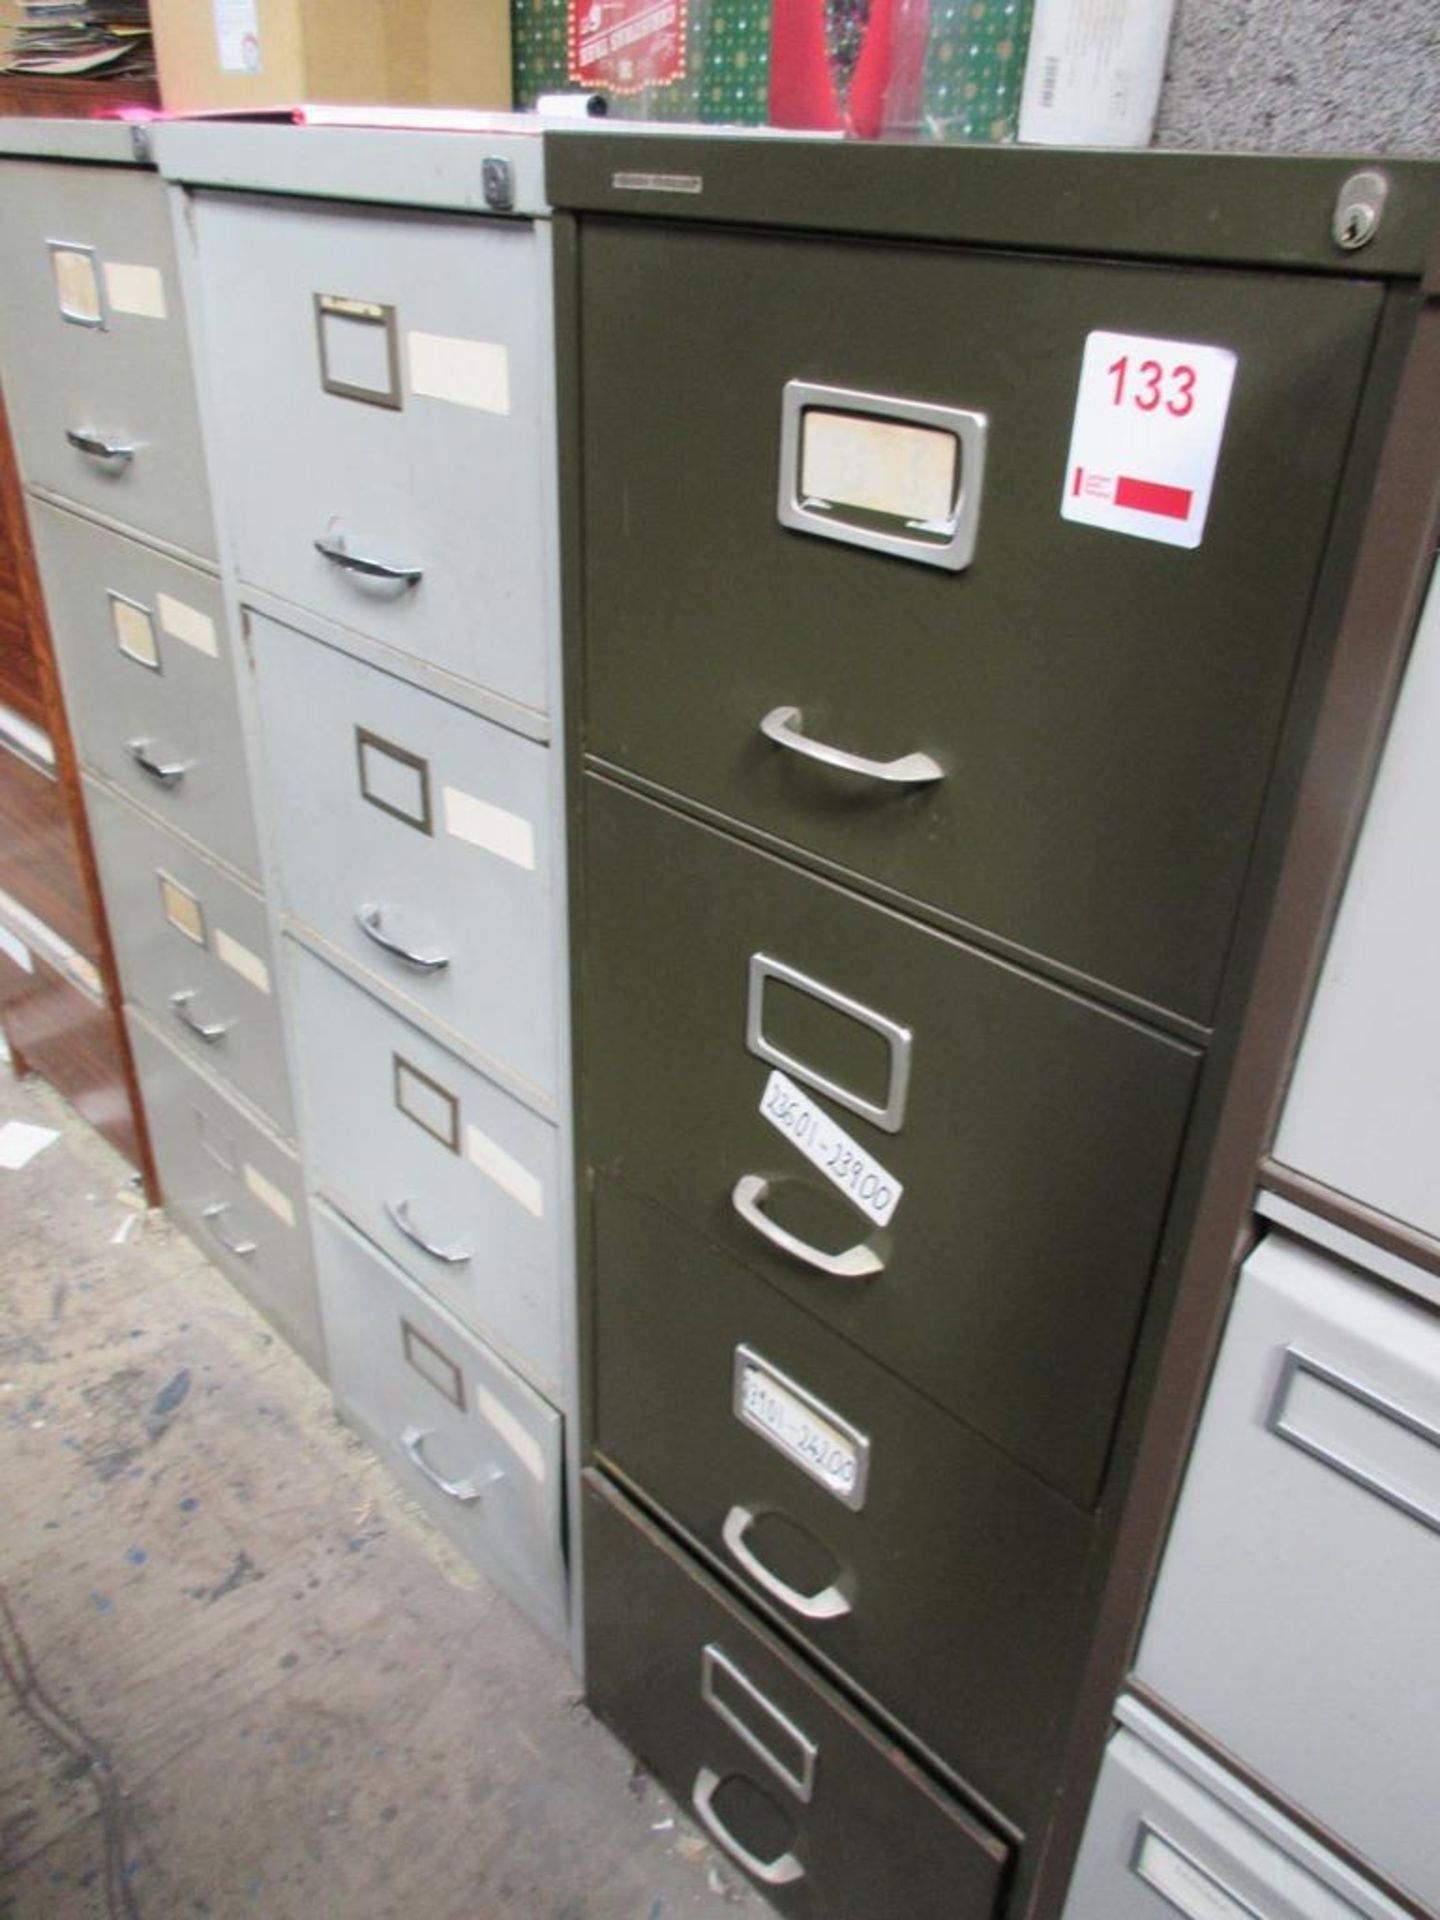 Three metal 4 drawer filing cabinets